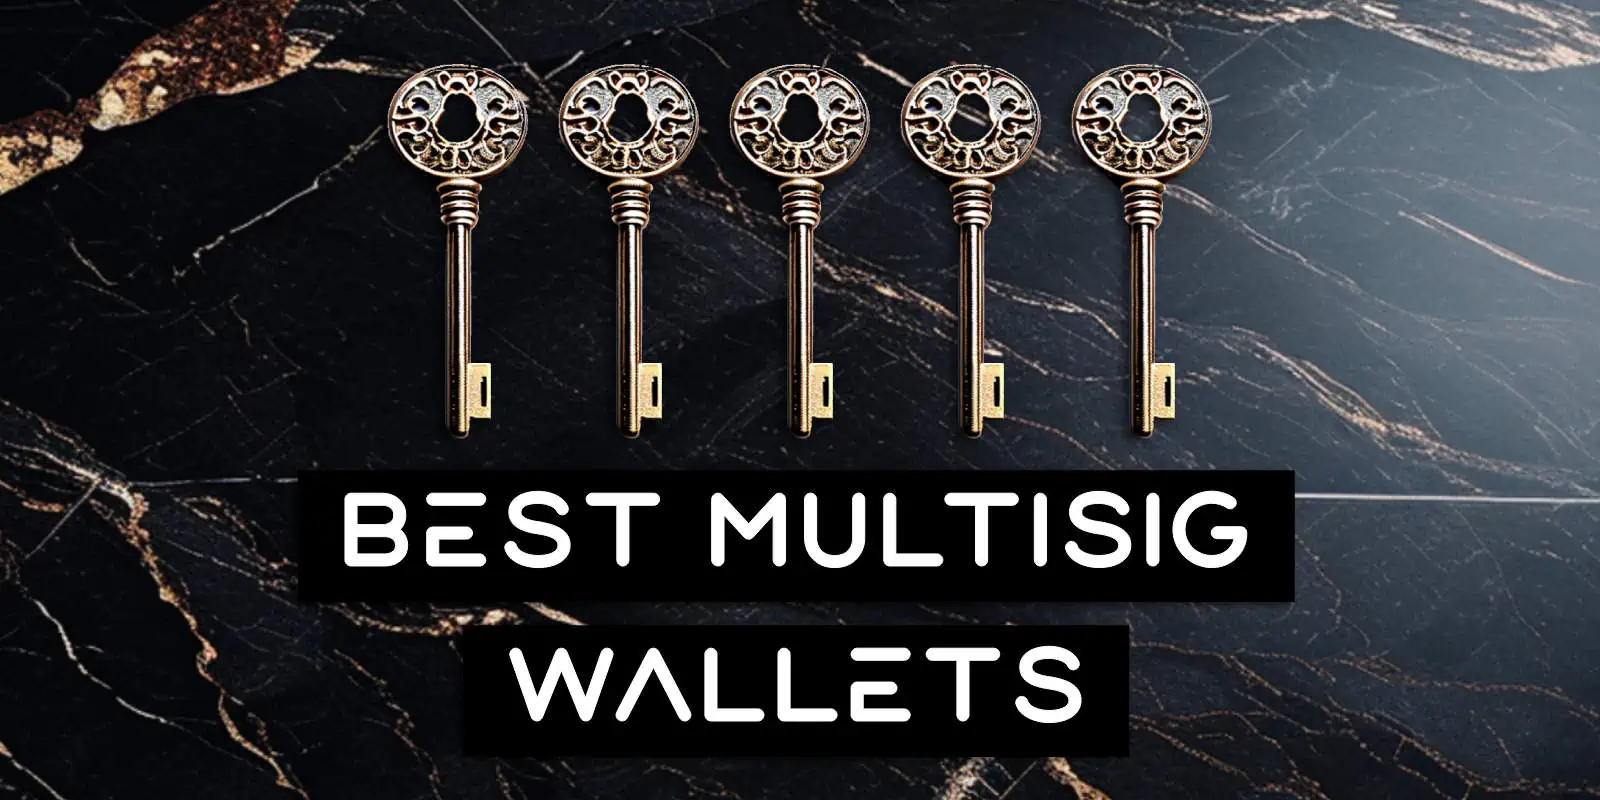 Best Multisig Wallet